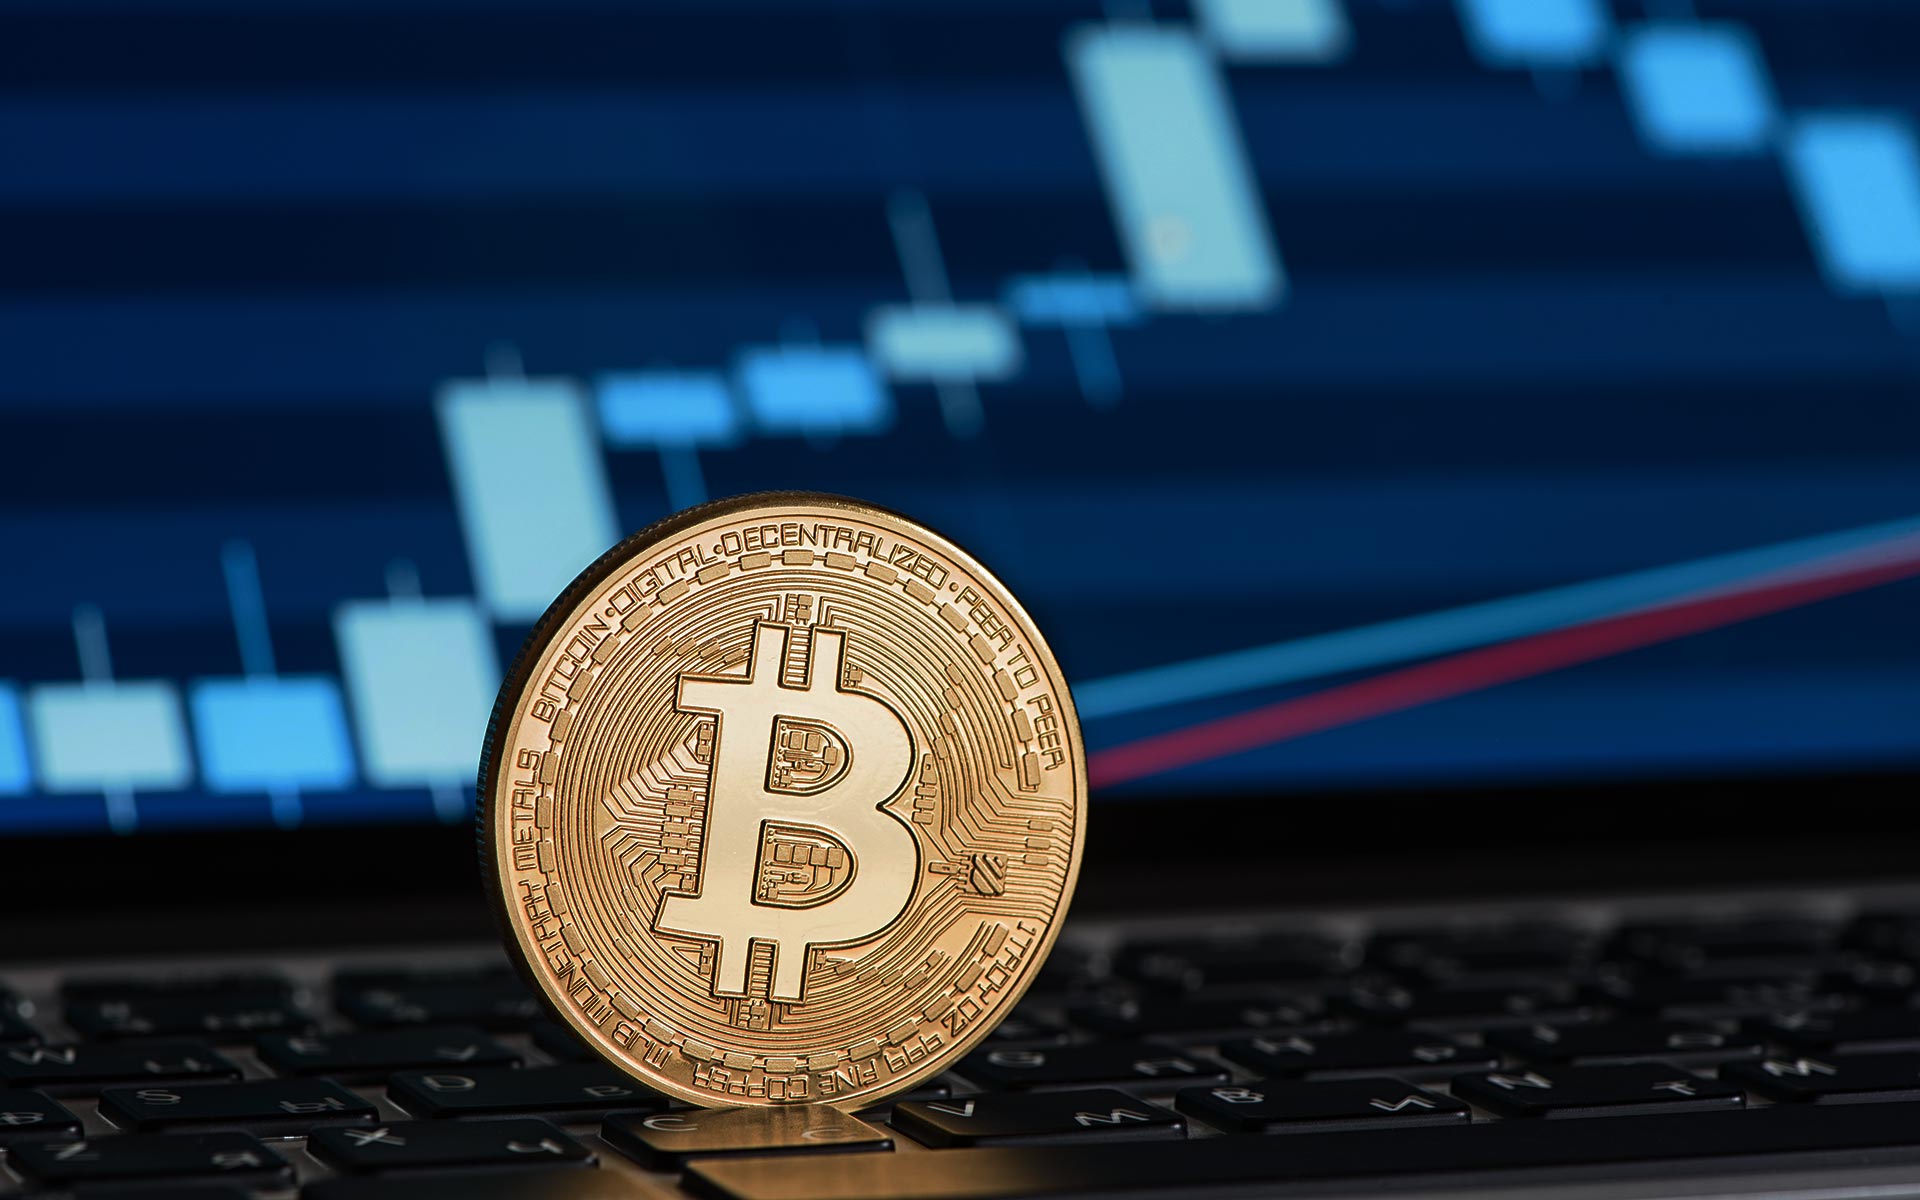 Bitcoin Trading at a Premium at Bitfinex and Poloniex